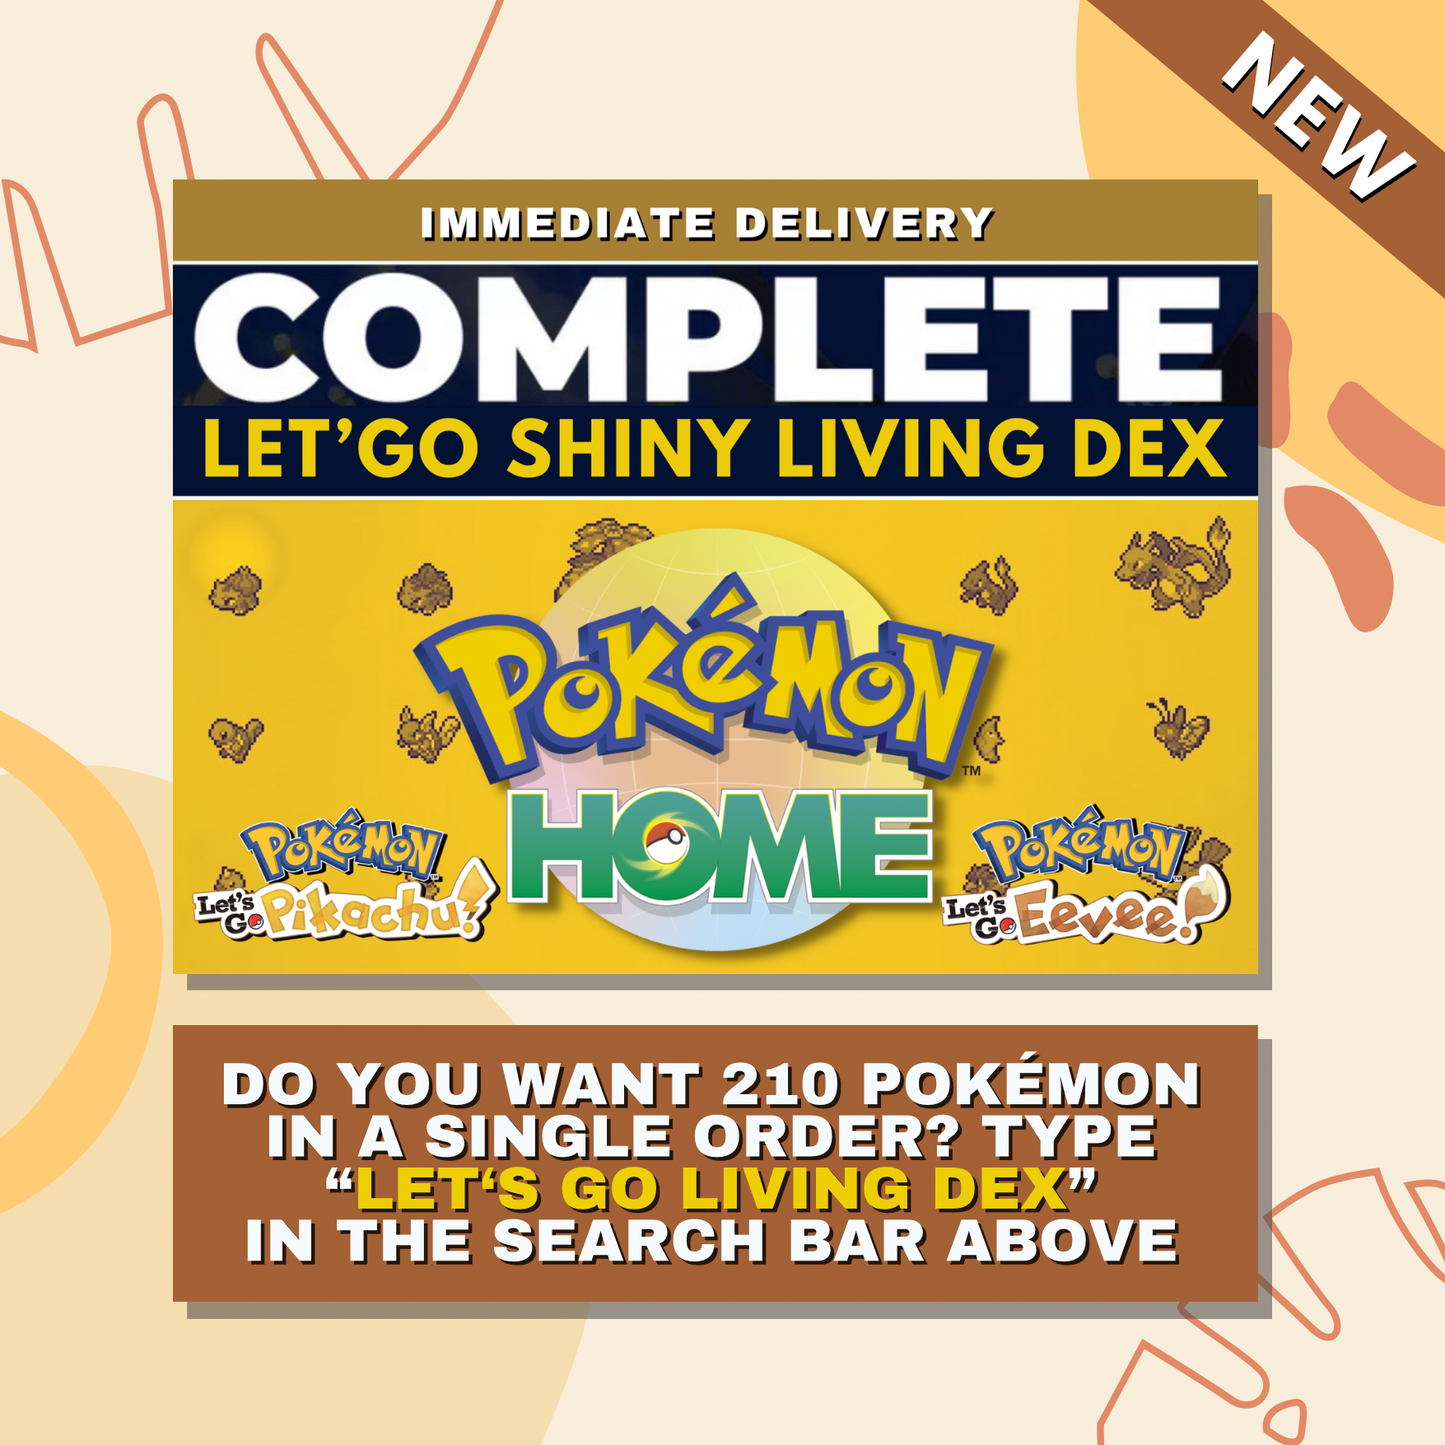 Vulpix Kanto Shiny ✨ or Non Shiny Pokémon Let's Go Pikachu Eevee Level 1 Legit 6 IV 100% Legal from GO Park Customizable Custom OT by Shiny Living Dex | Shiny Living Dex